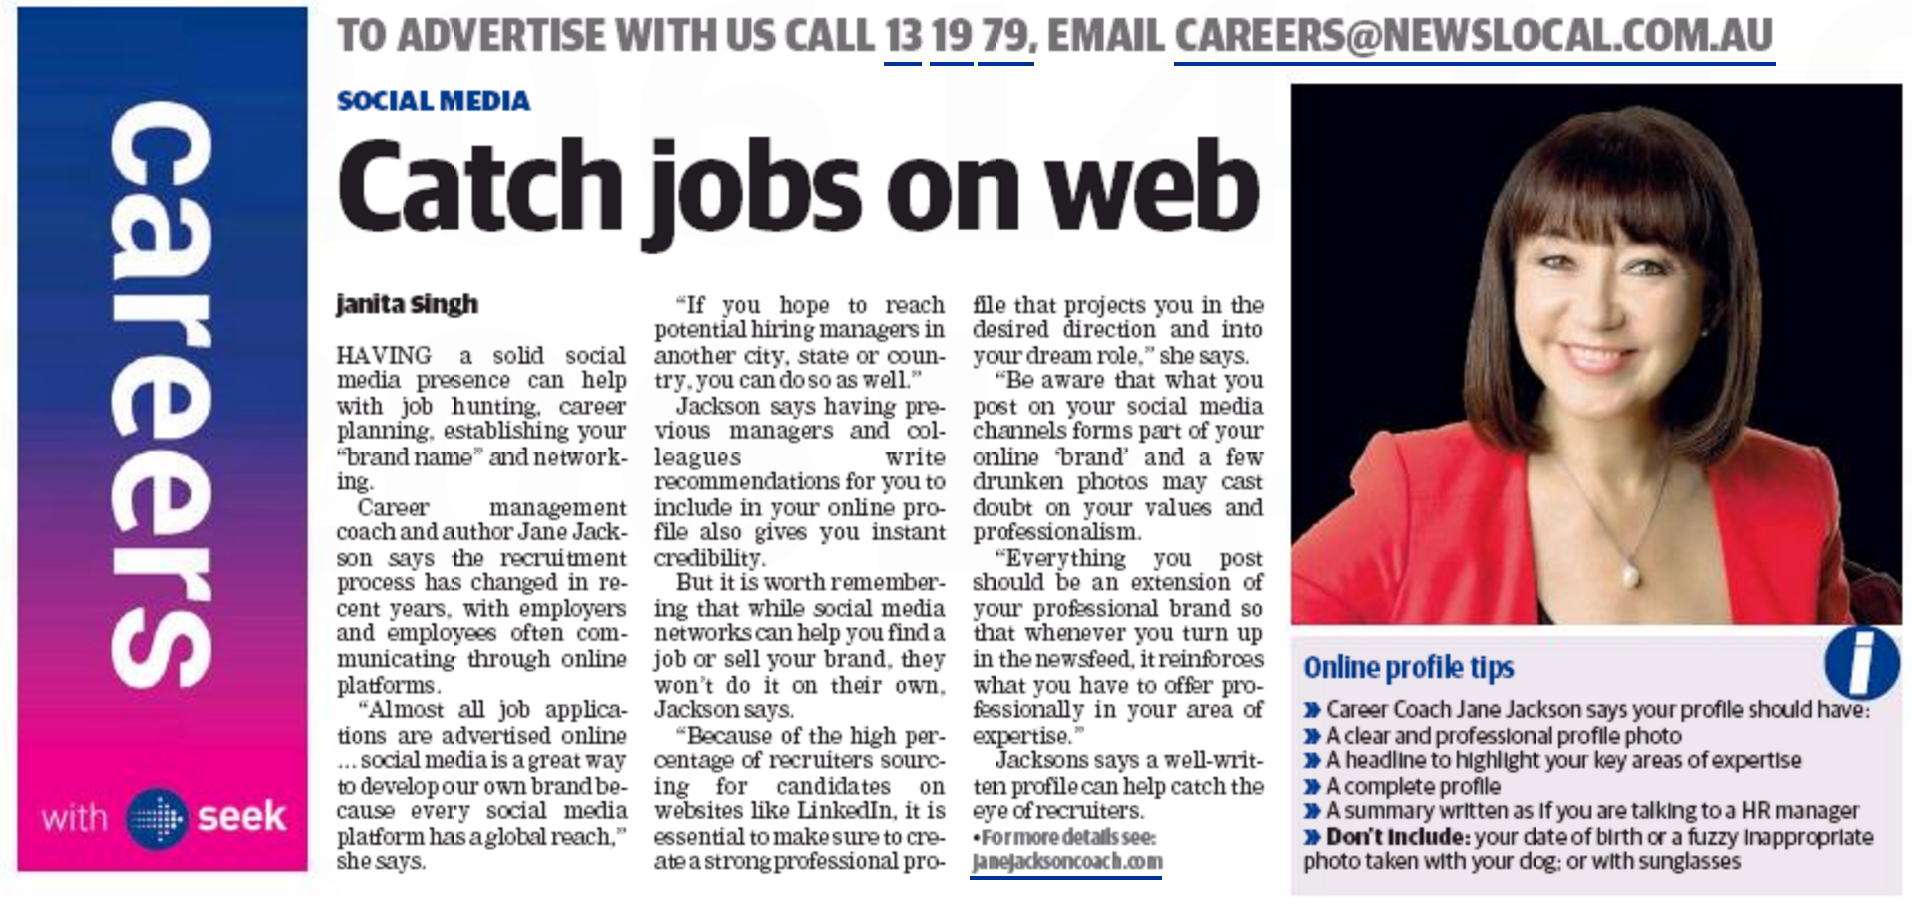 Manly Daily, News Local, Seek.com.au, Seek, Jane Jackson, Career Coach, online, job seekers, LinkedIn, social media